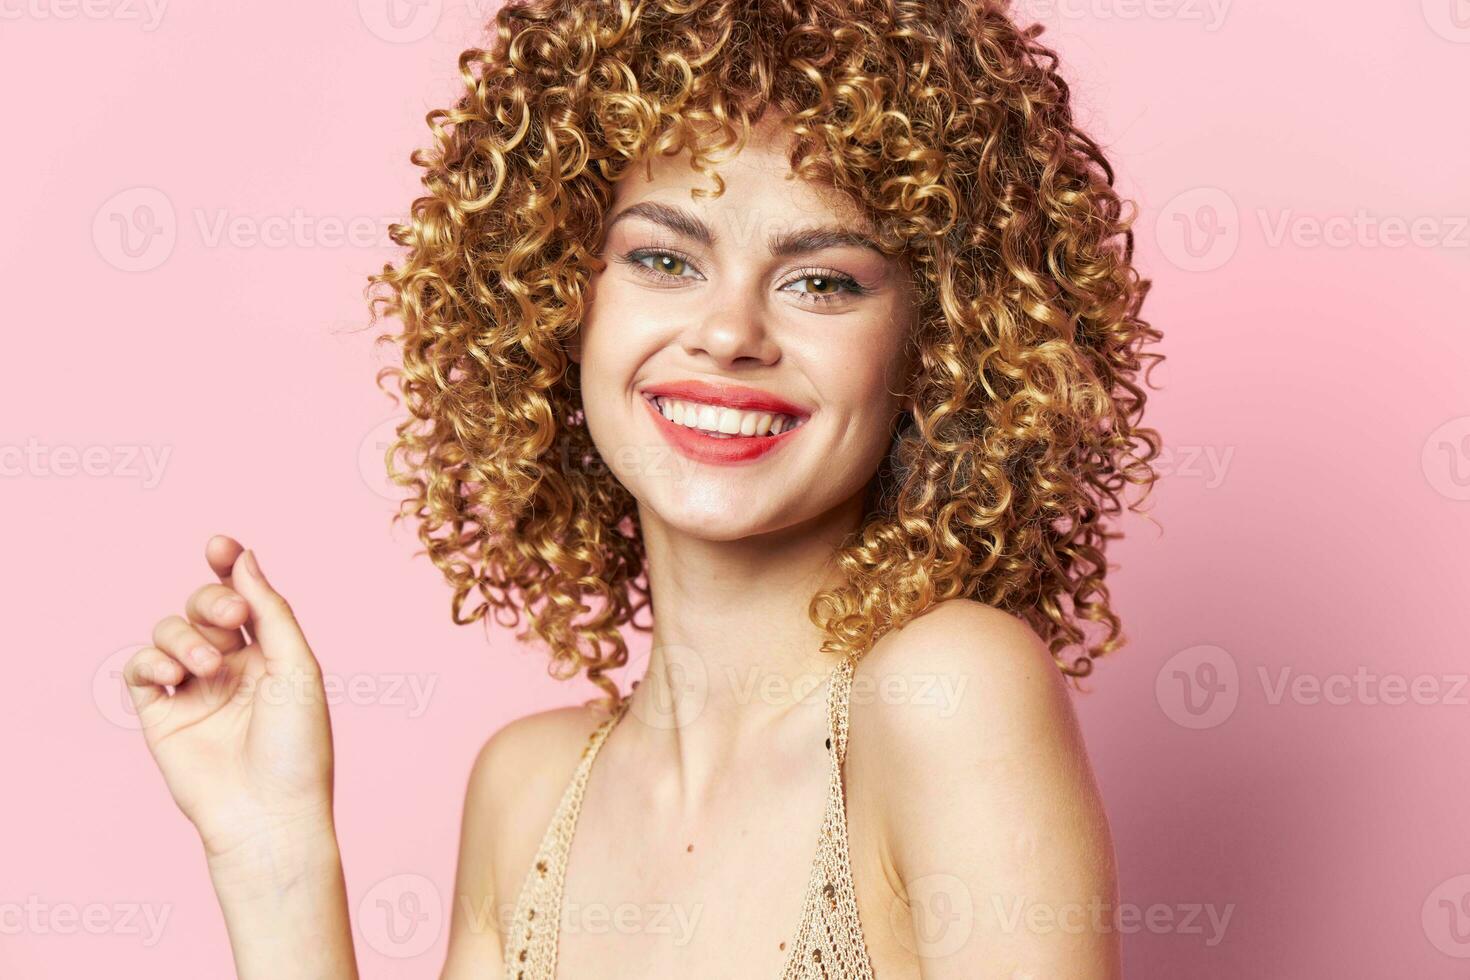 woman Smile bright makeup curly hair fun sequin shirt photo